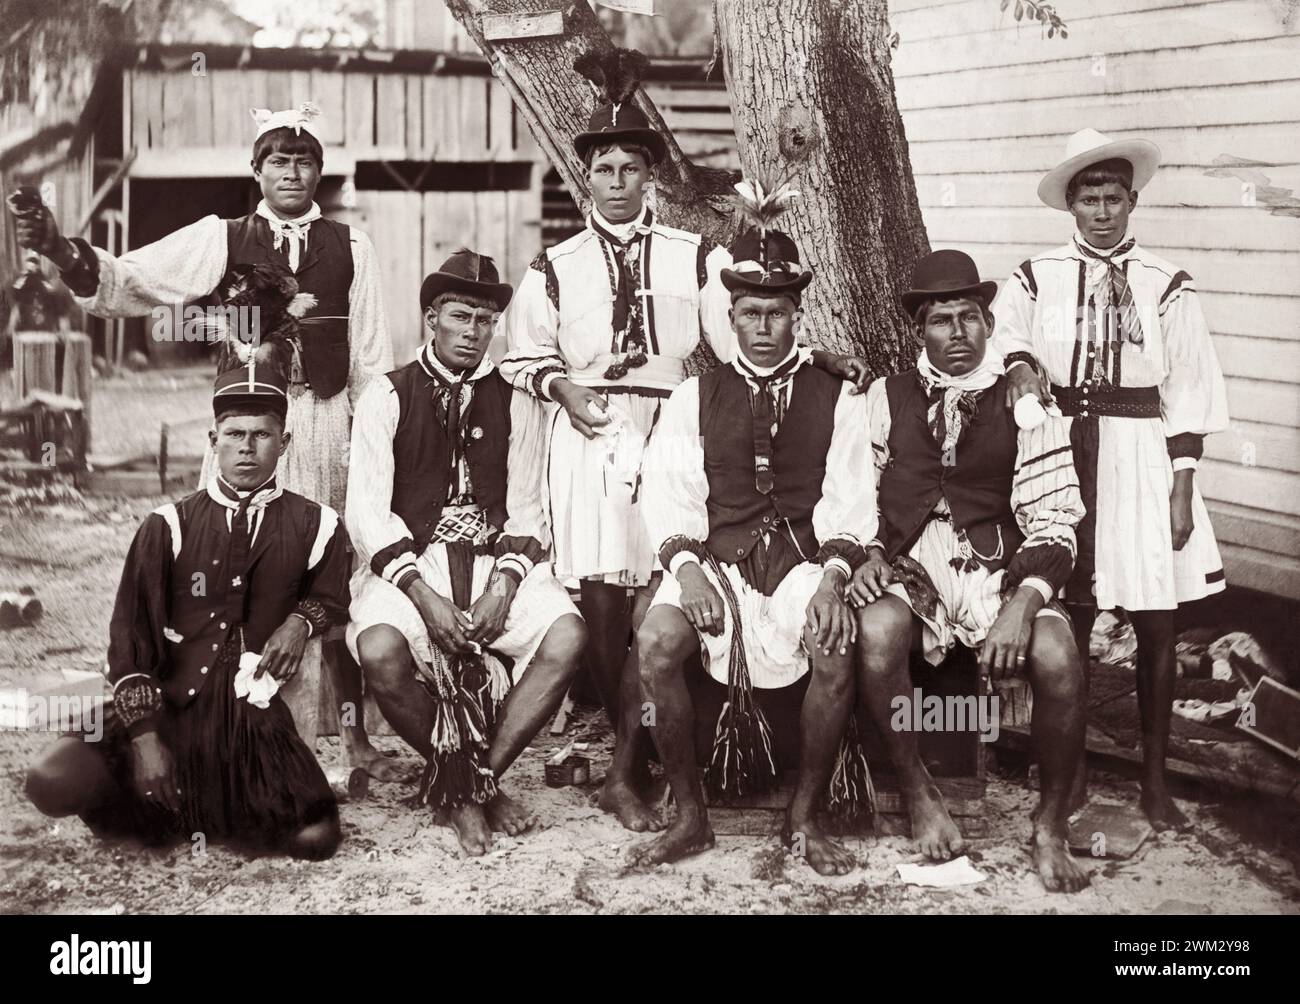 Group portrait of Seminole braves in native dress, c1896. Stock Photo